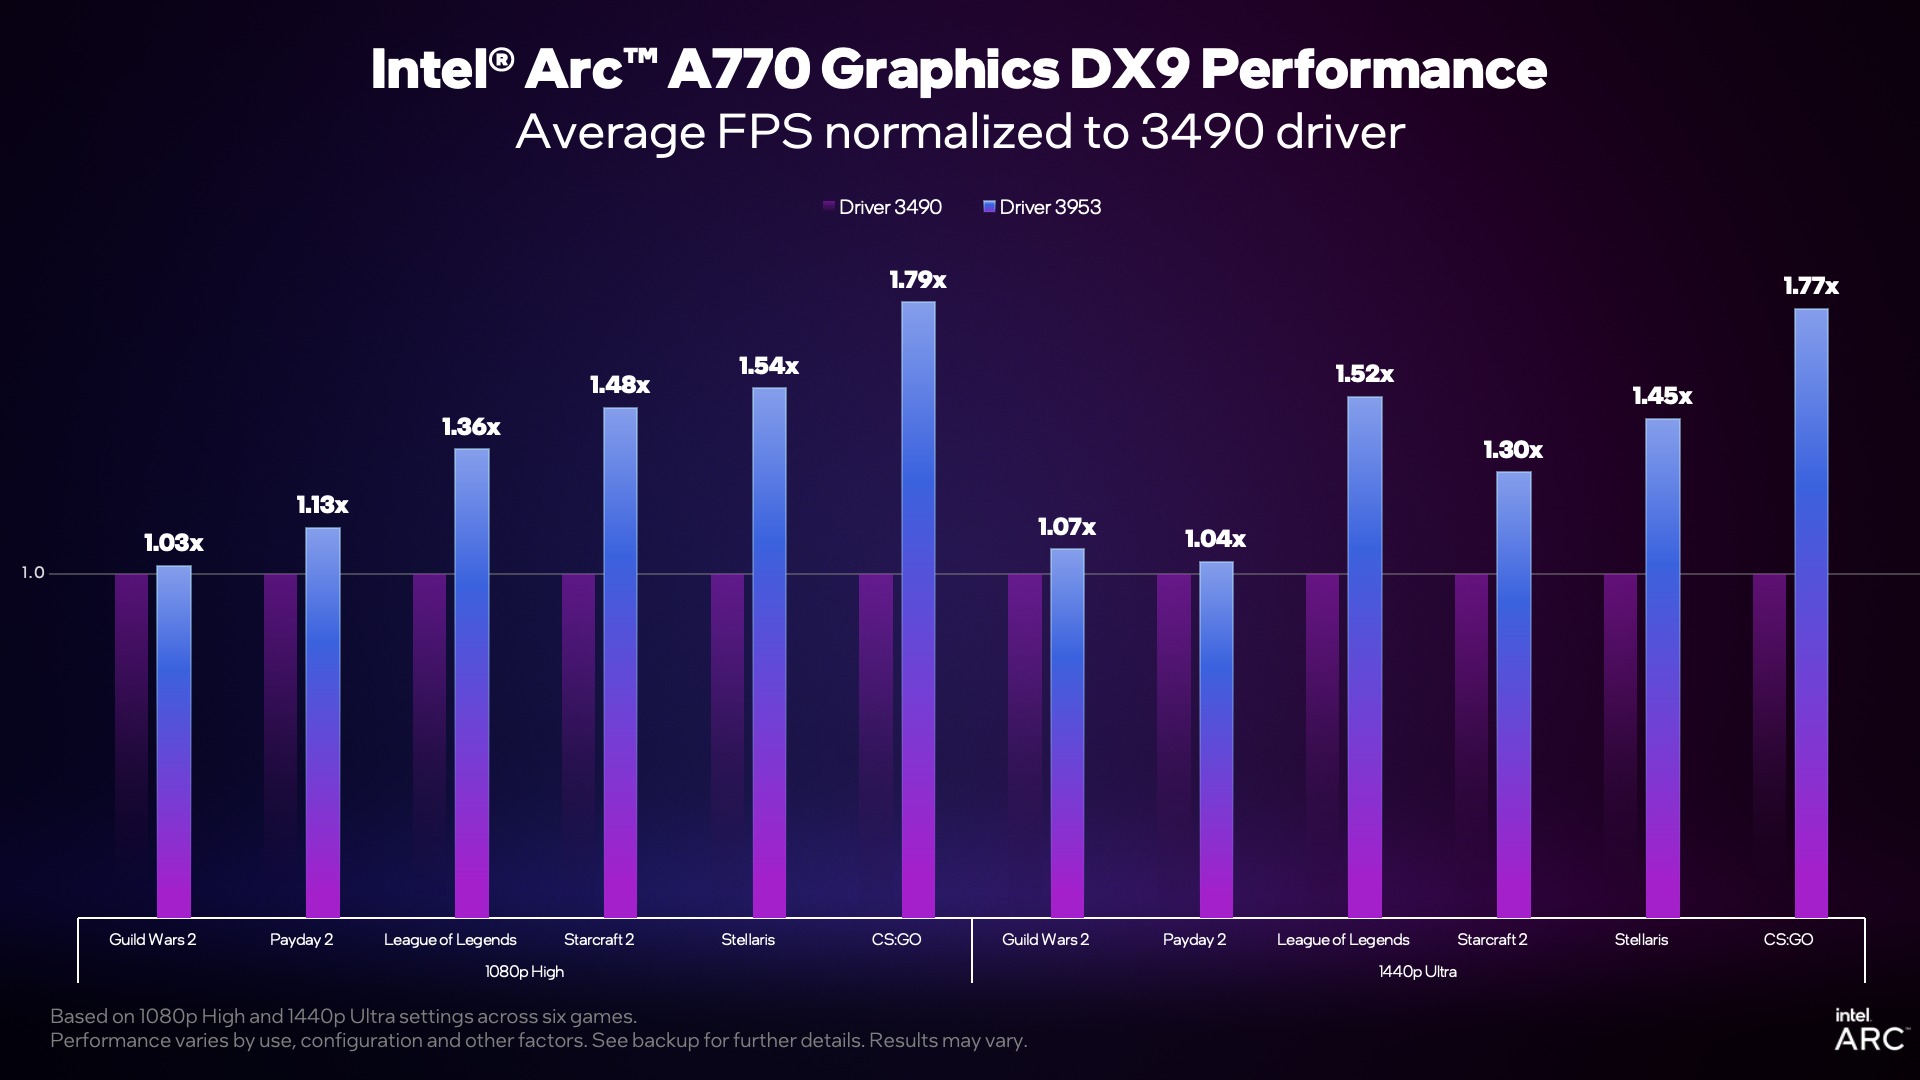 intel arc dx9 update 5 อินเทลเผยไดร์เวอร์ใหม่การ์ดจอ Intel Arc ช่วยเพิ่มประสิทธิภาพสำหรับเกม DX9 หลากหลายเกมส์รวมไปถึง CS:GO ที่ประสิทธิภาพแรงขึ้น 1.8x เท่า 